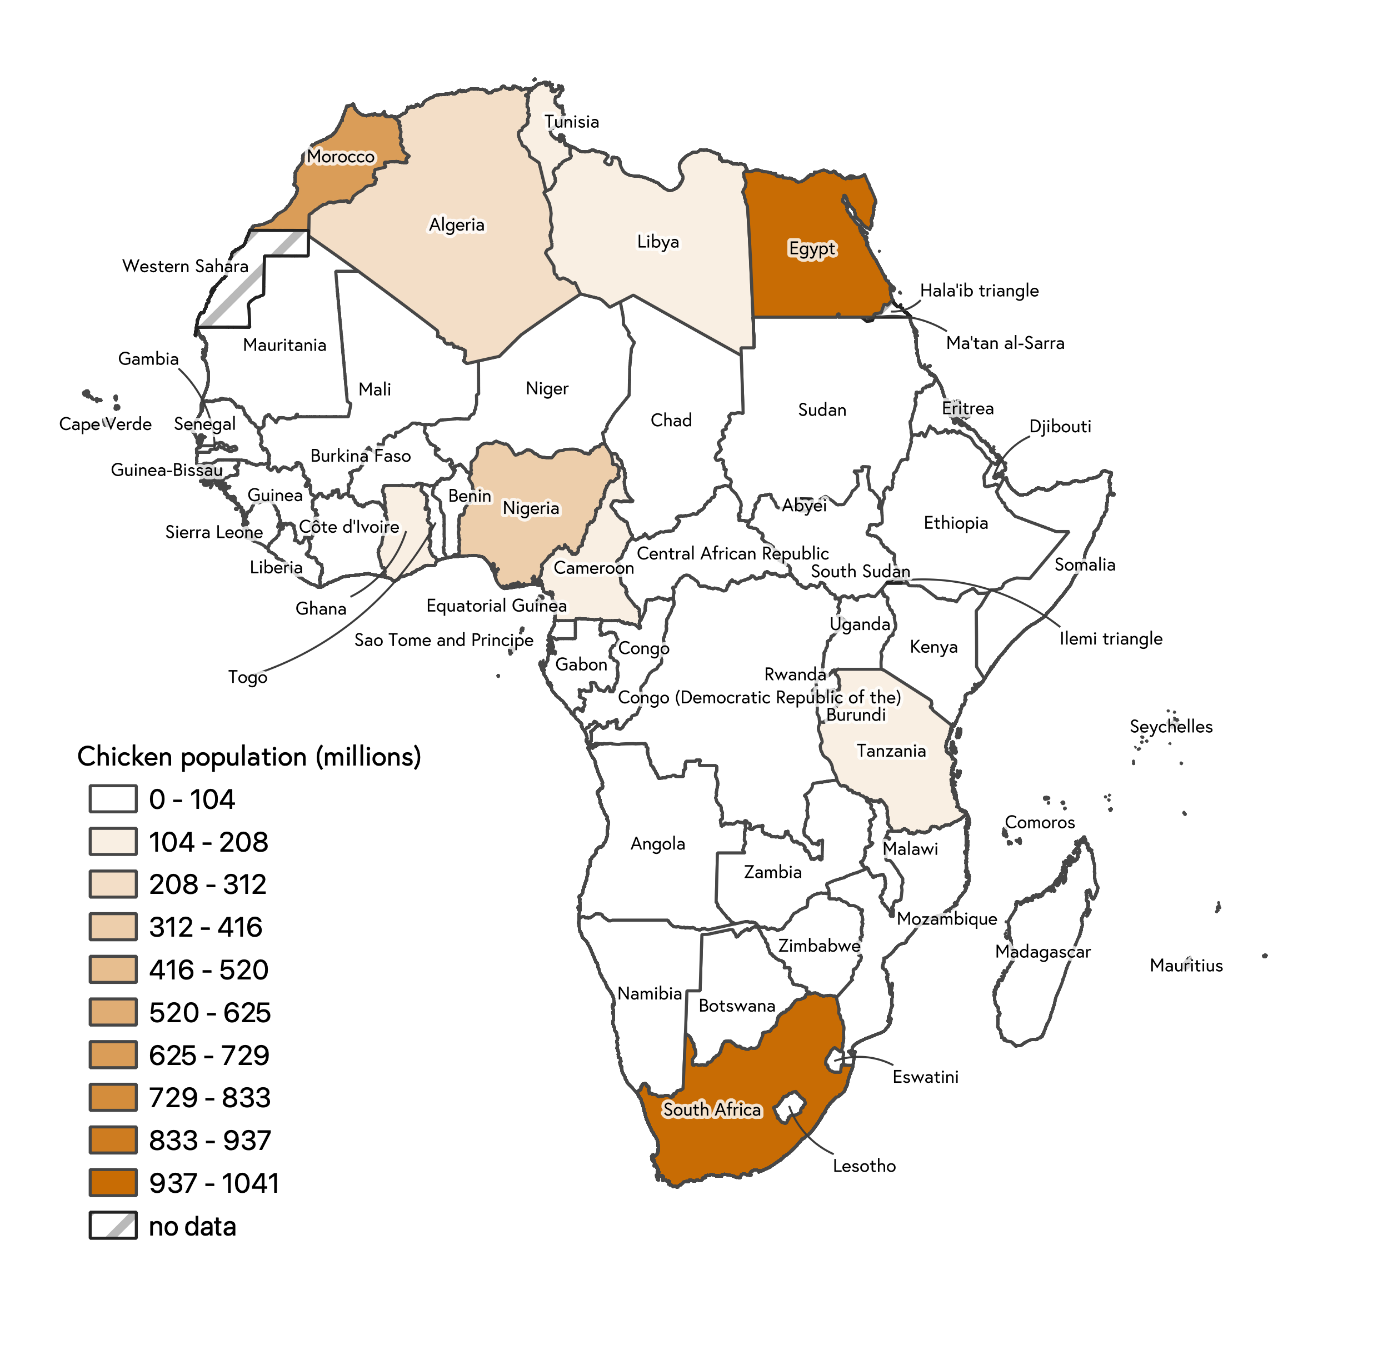 Figure 4: Chicken populations across Africa, 2020. Data source: FAOSTAT database.